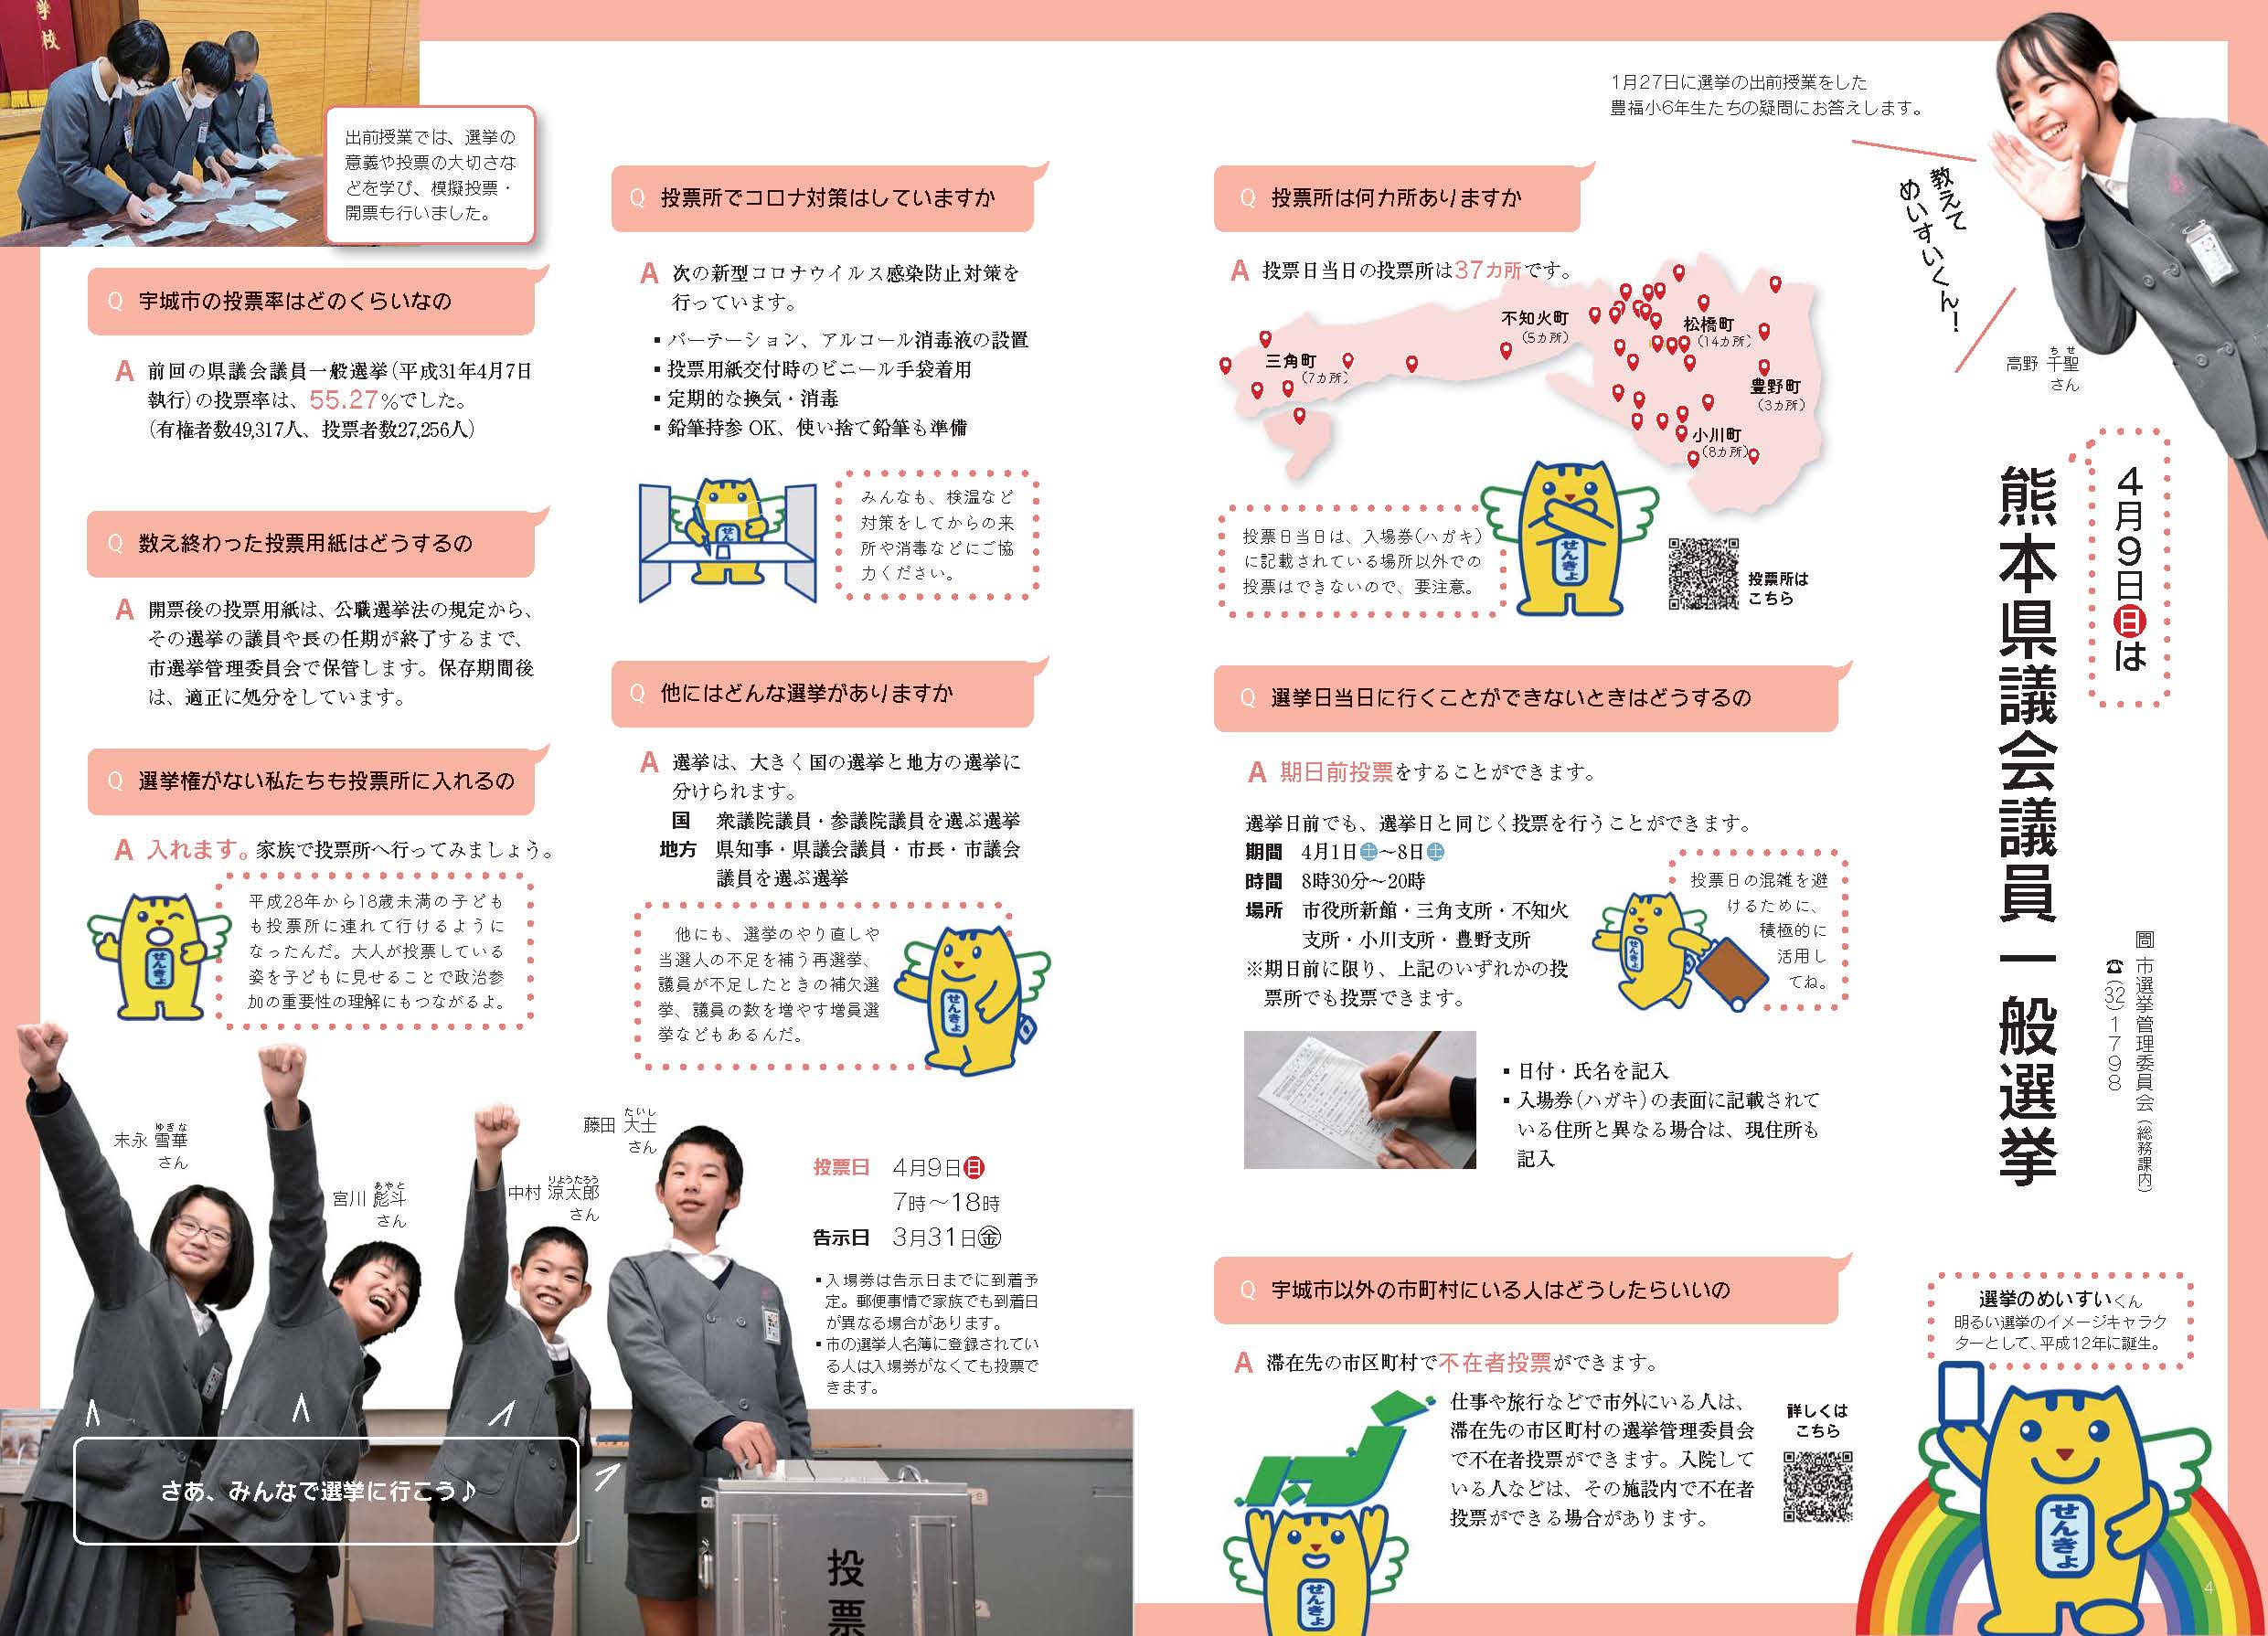 P4、P5 4月9日は 熊本県議会議員一般選挙のページ画像、詳細はPDFファイルを参照ください。